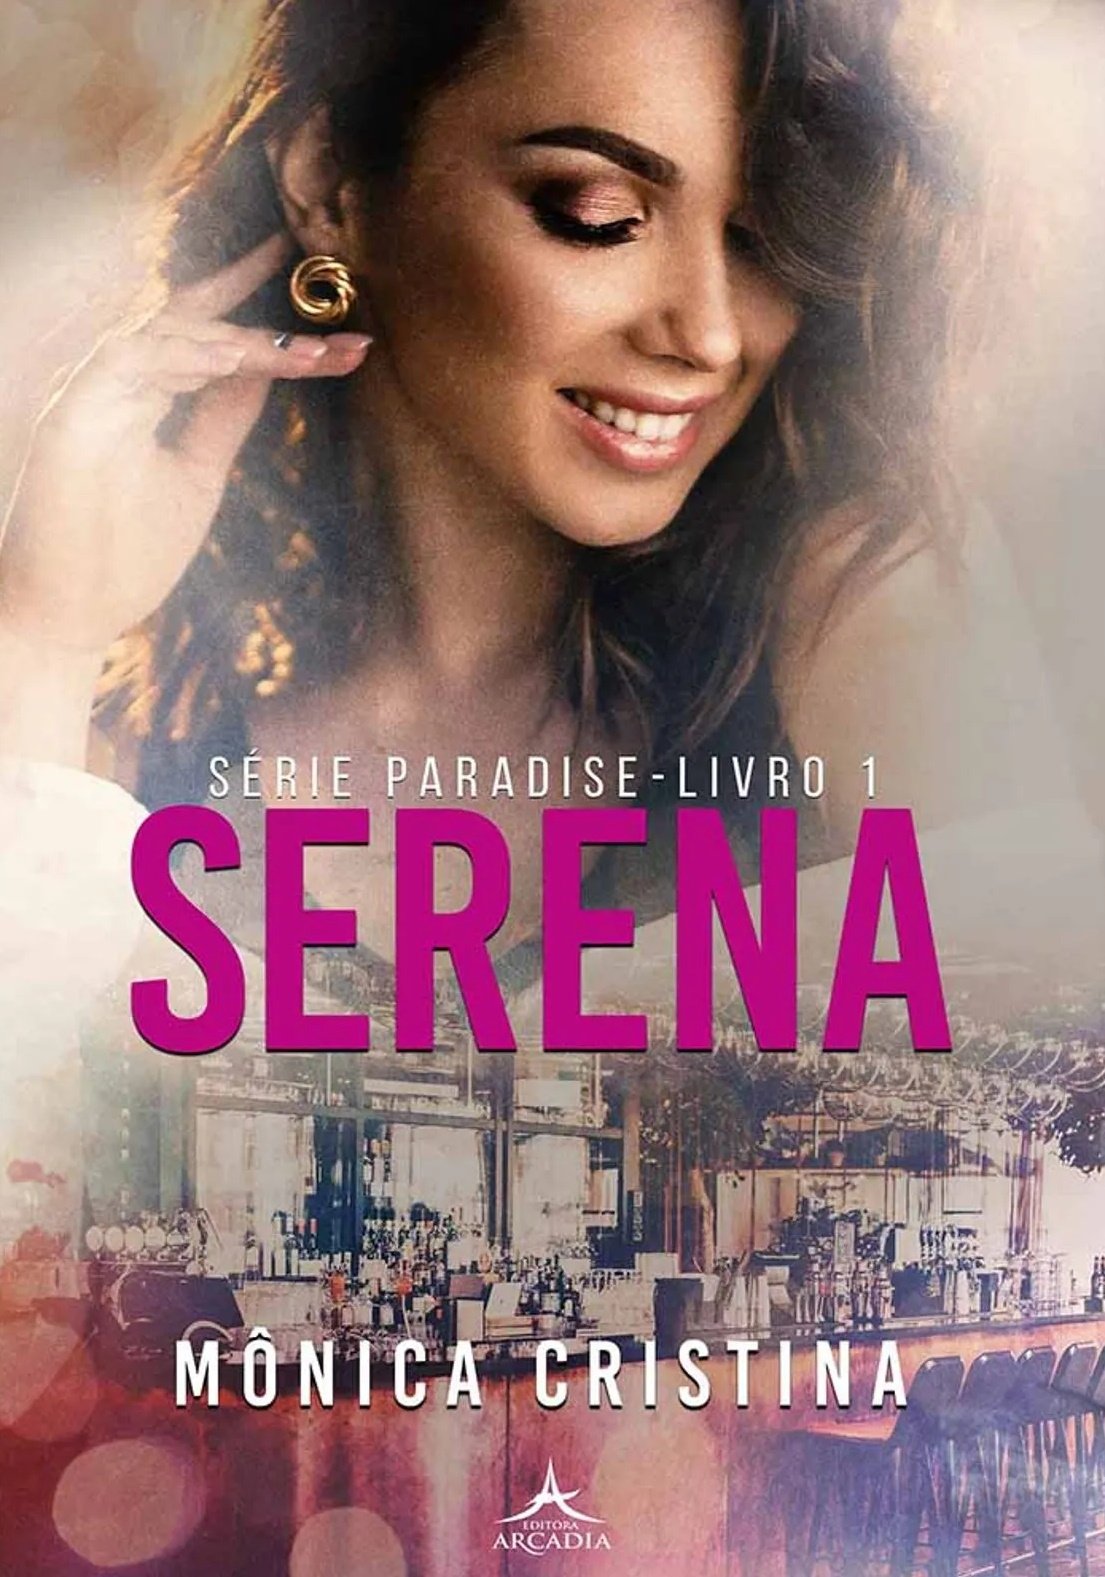 Serena Ierna